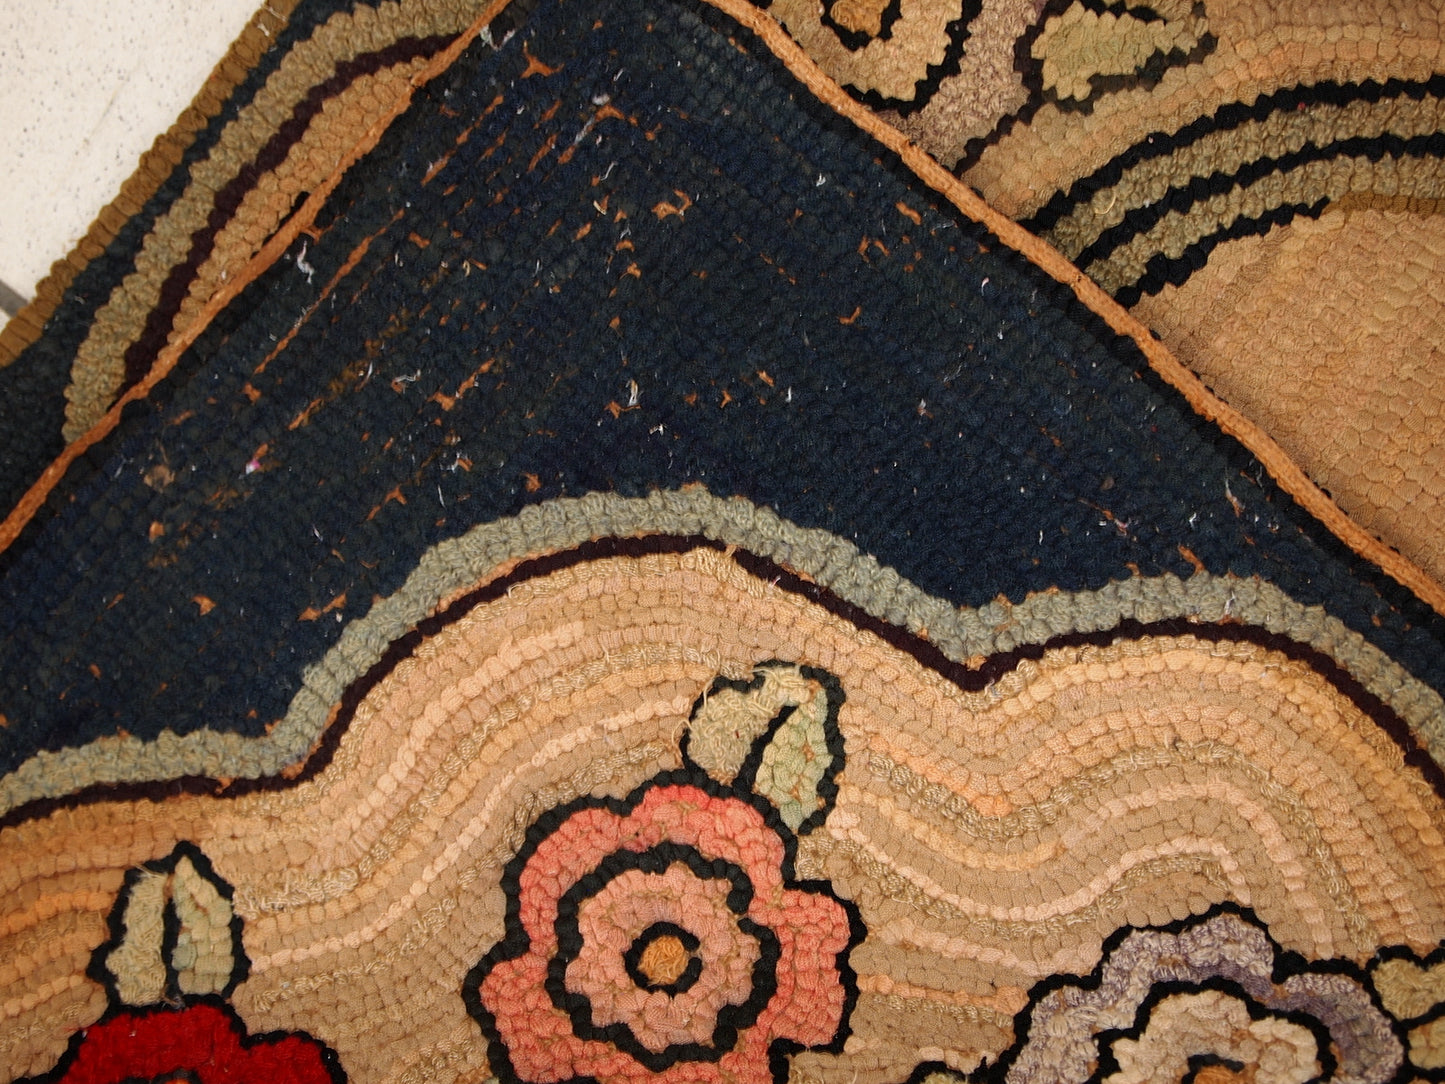 Handmade antique American Hooked rug, 1900s